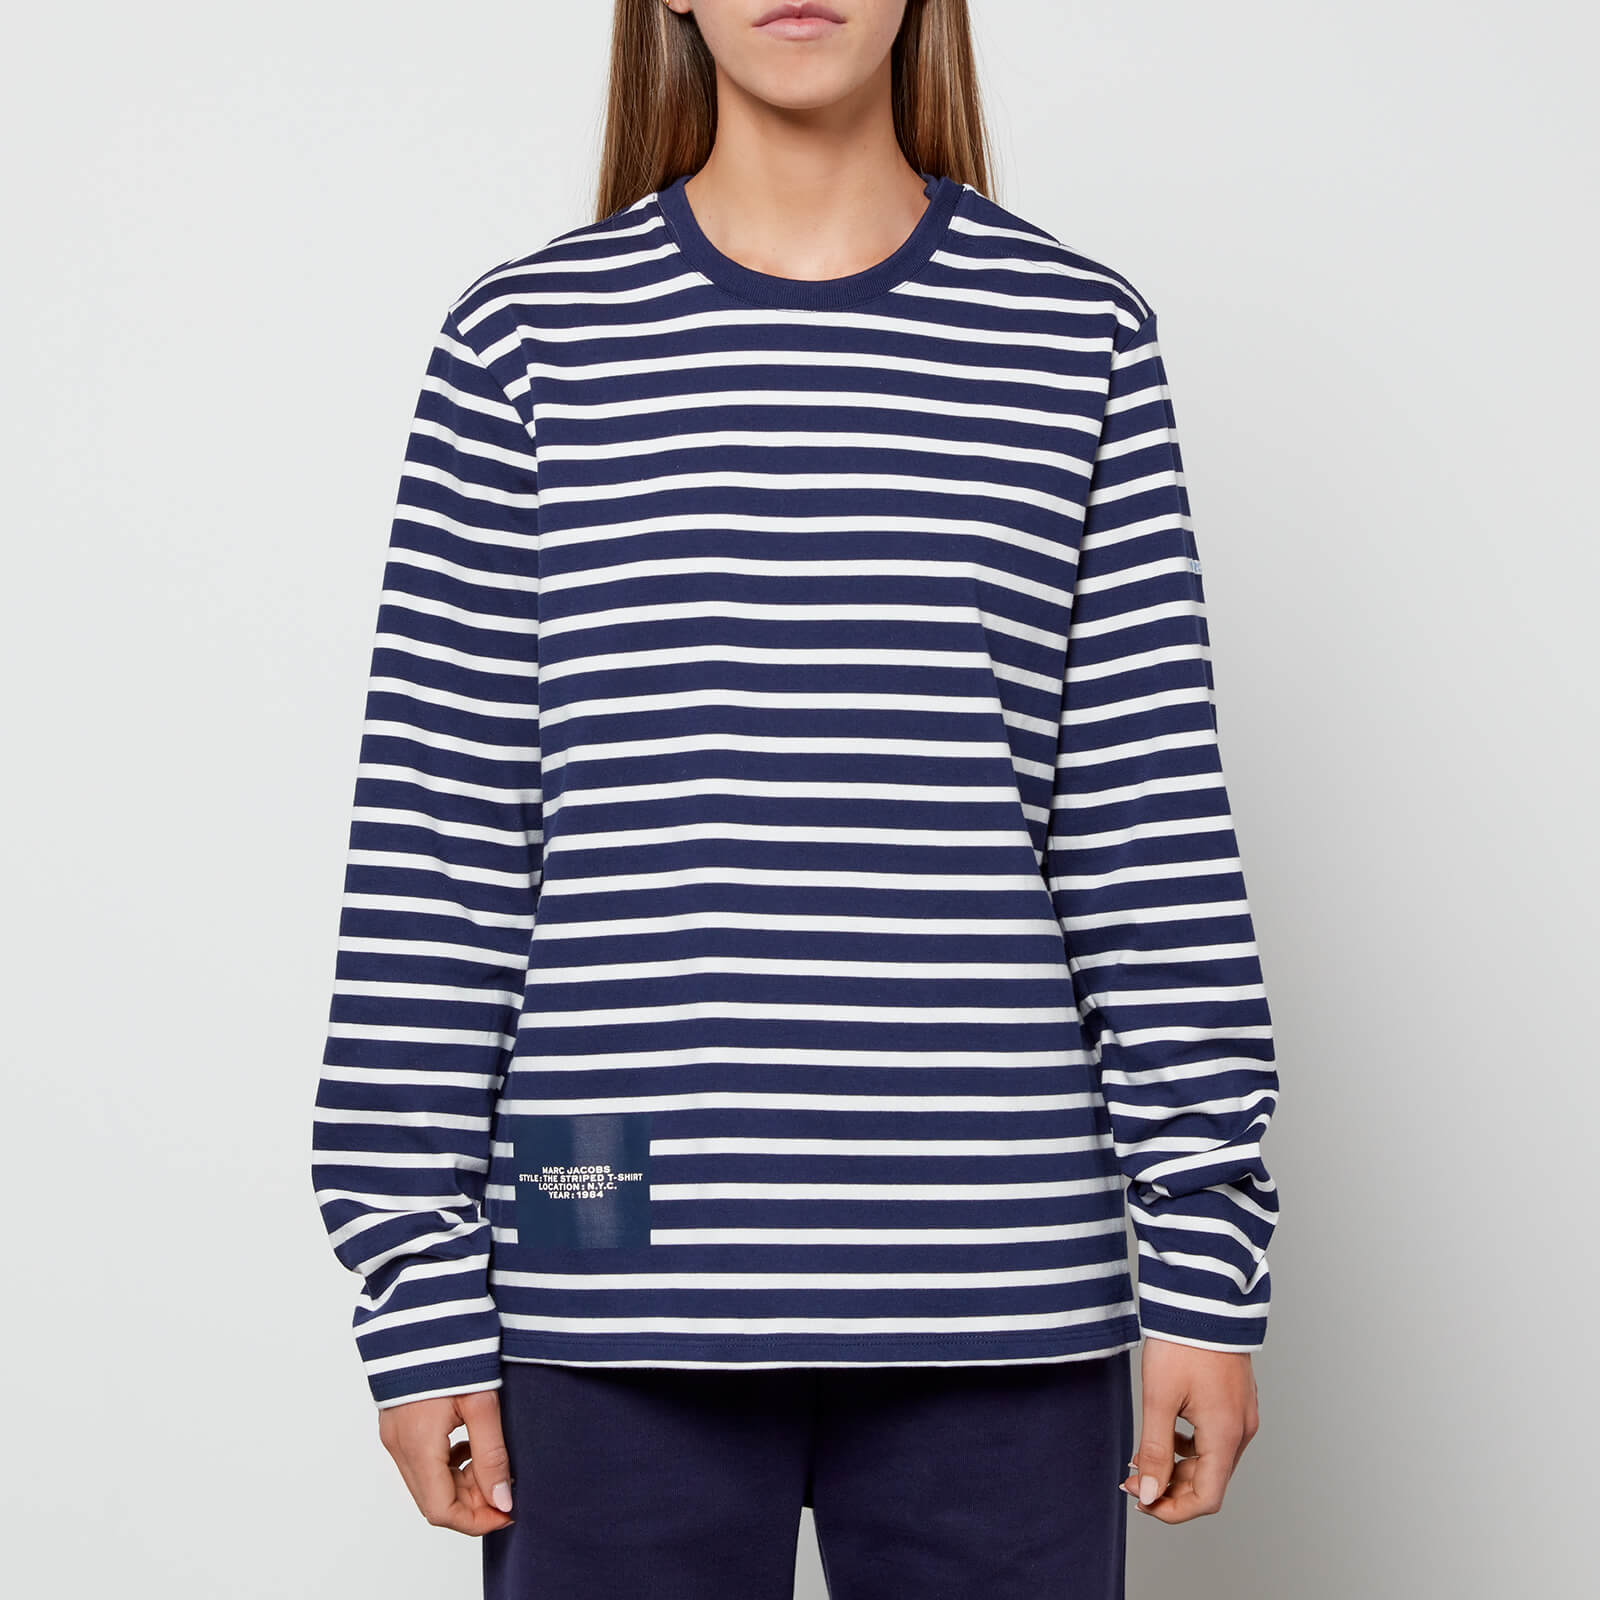 Marc Jacobs Women's The Striped T-Shirt - Blue Navy Multi - XS